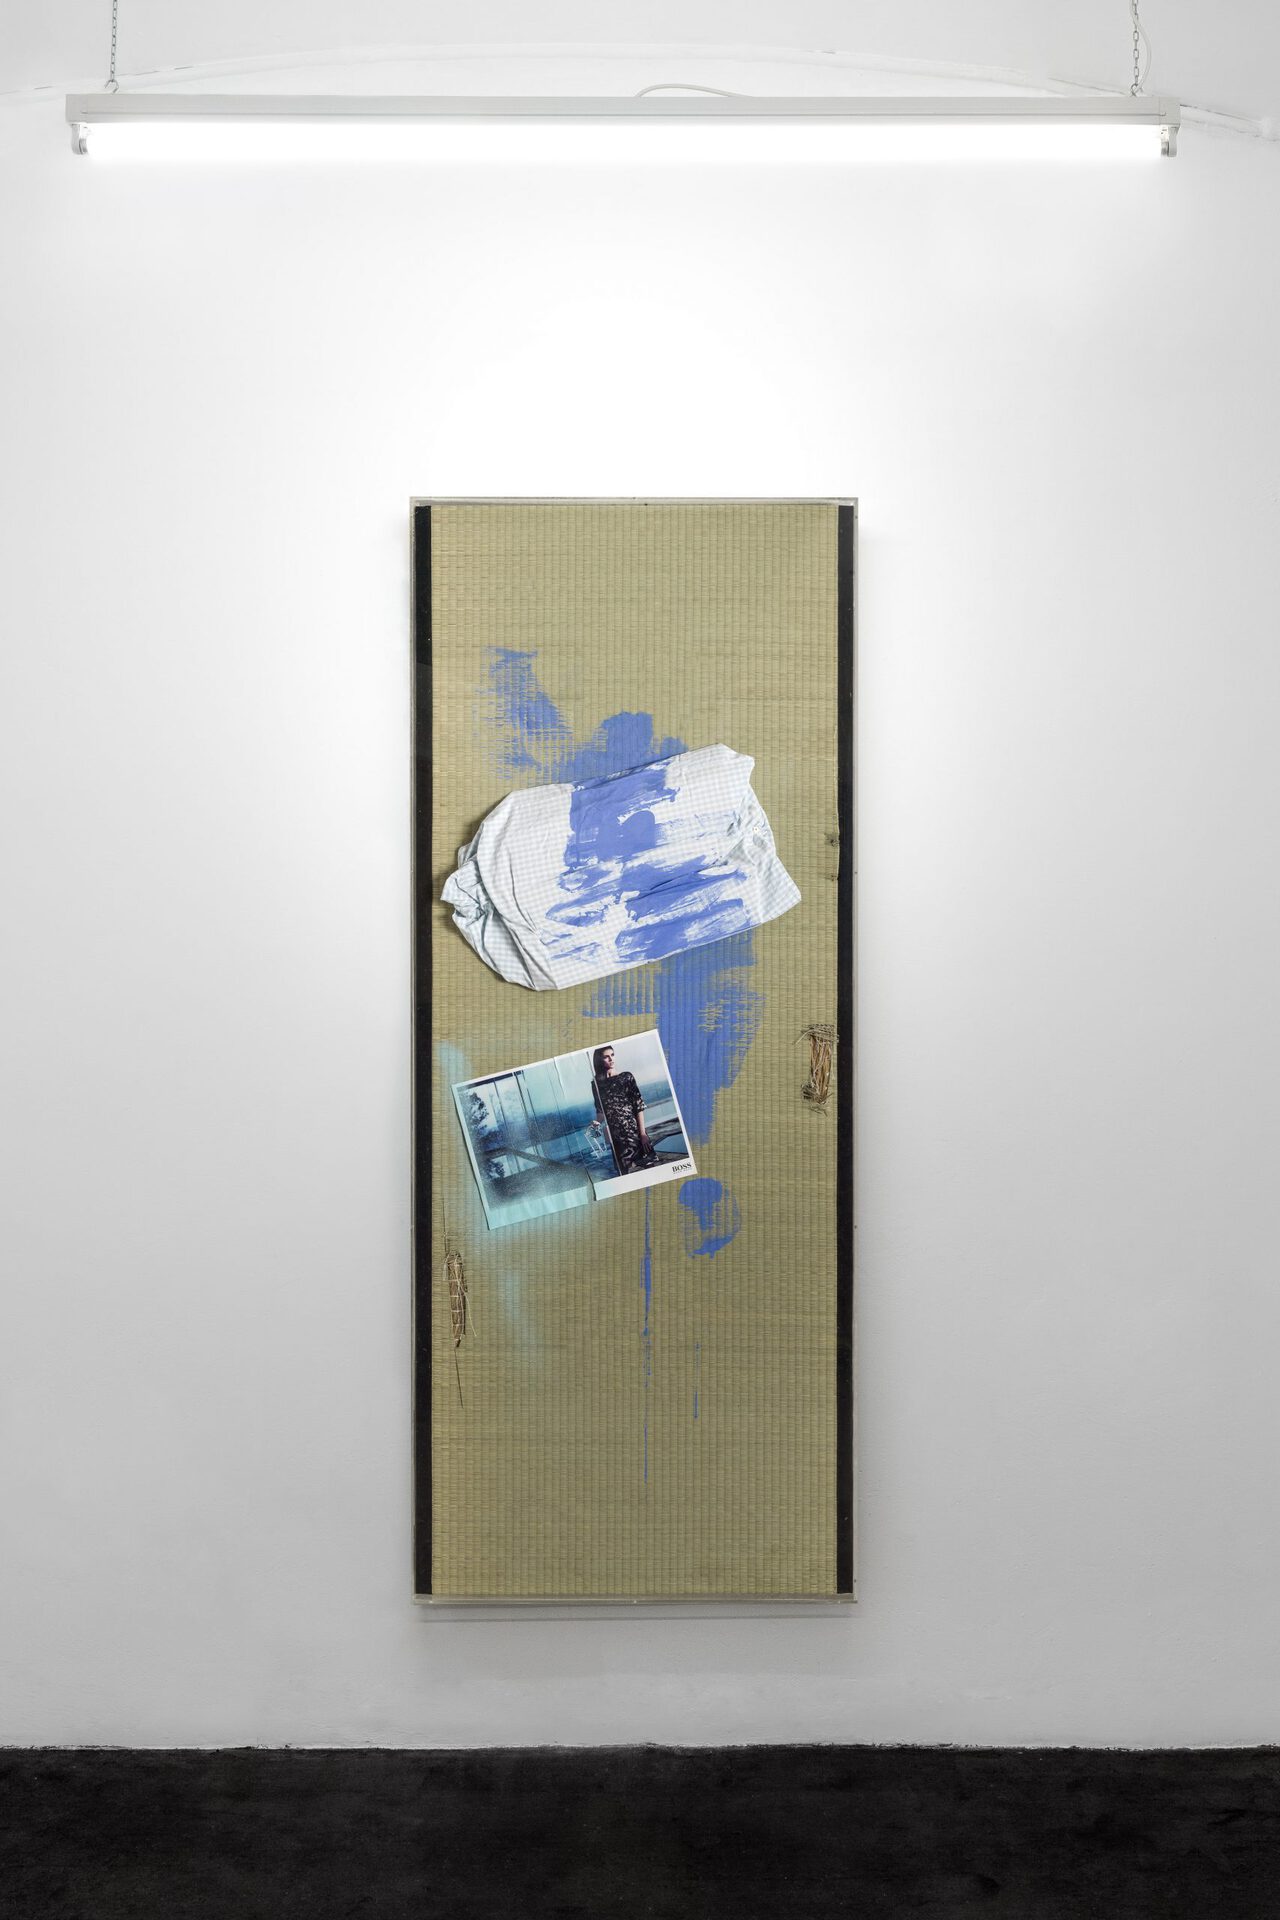 Yves Scherer, Sirens (Air Bnb), 2015, Tatami mat, wood, plexiglass, magazine page, pillow, fabric, acrylic paint, 200cm x 80cm x 10cm